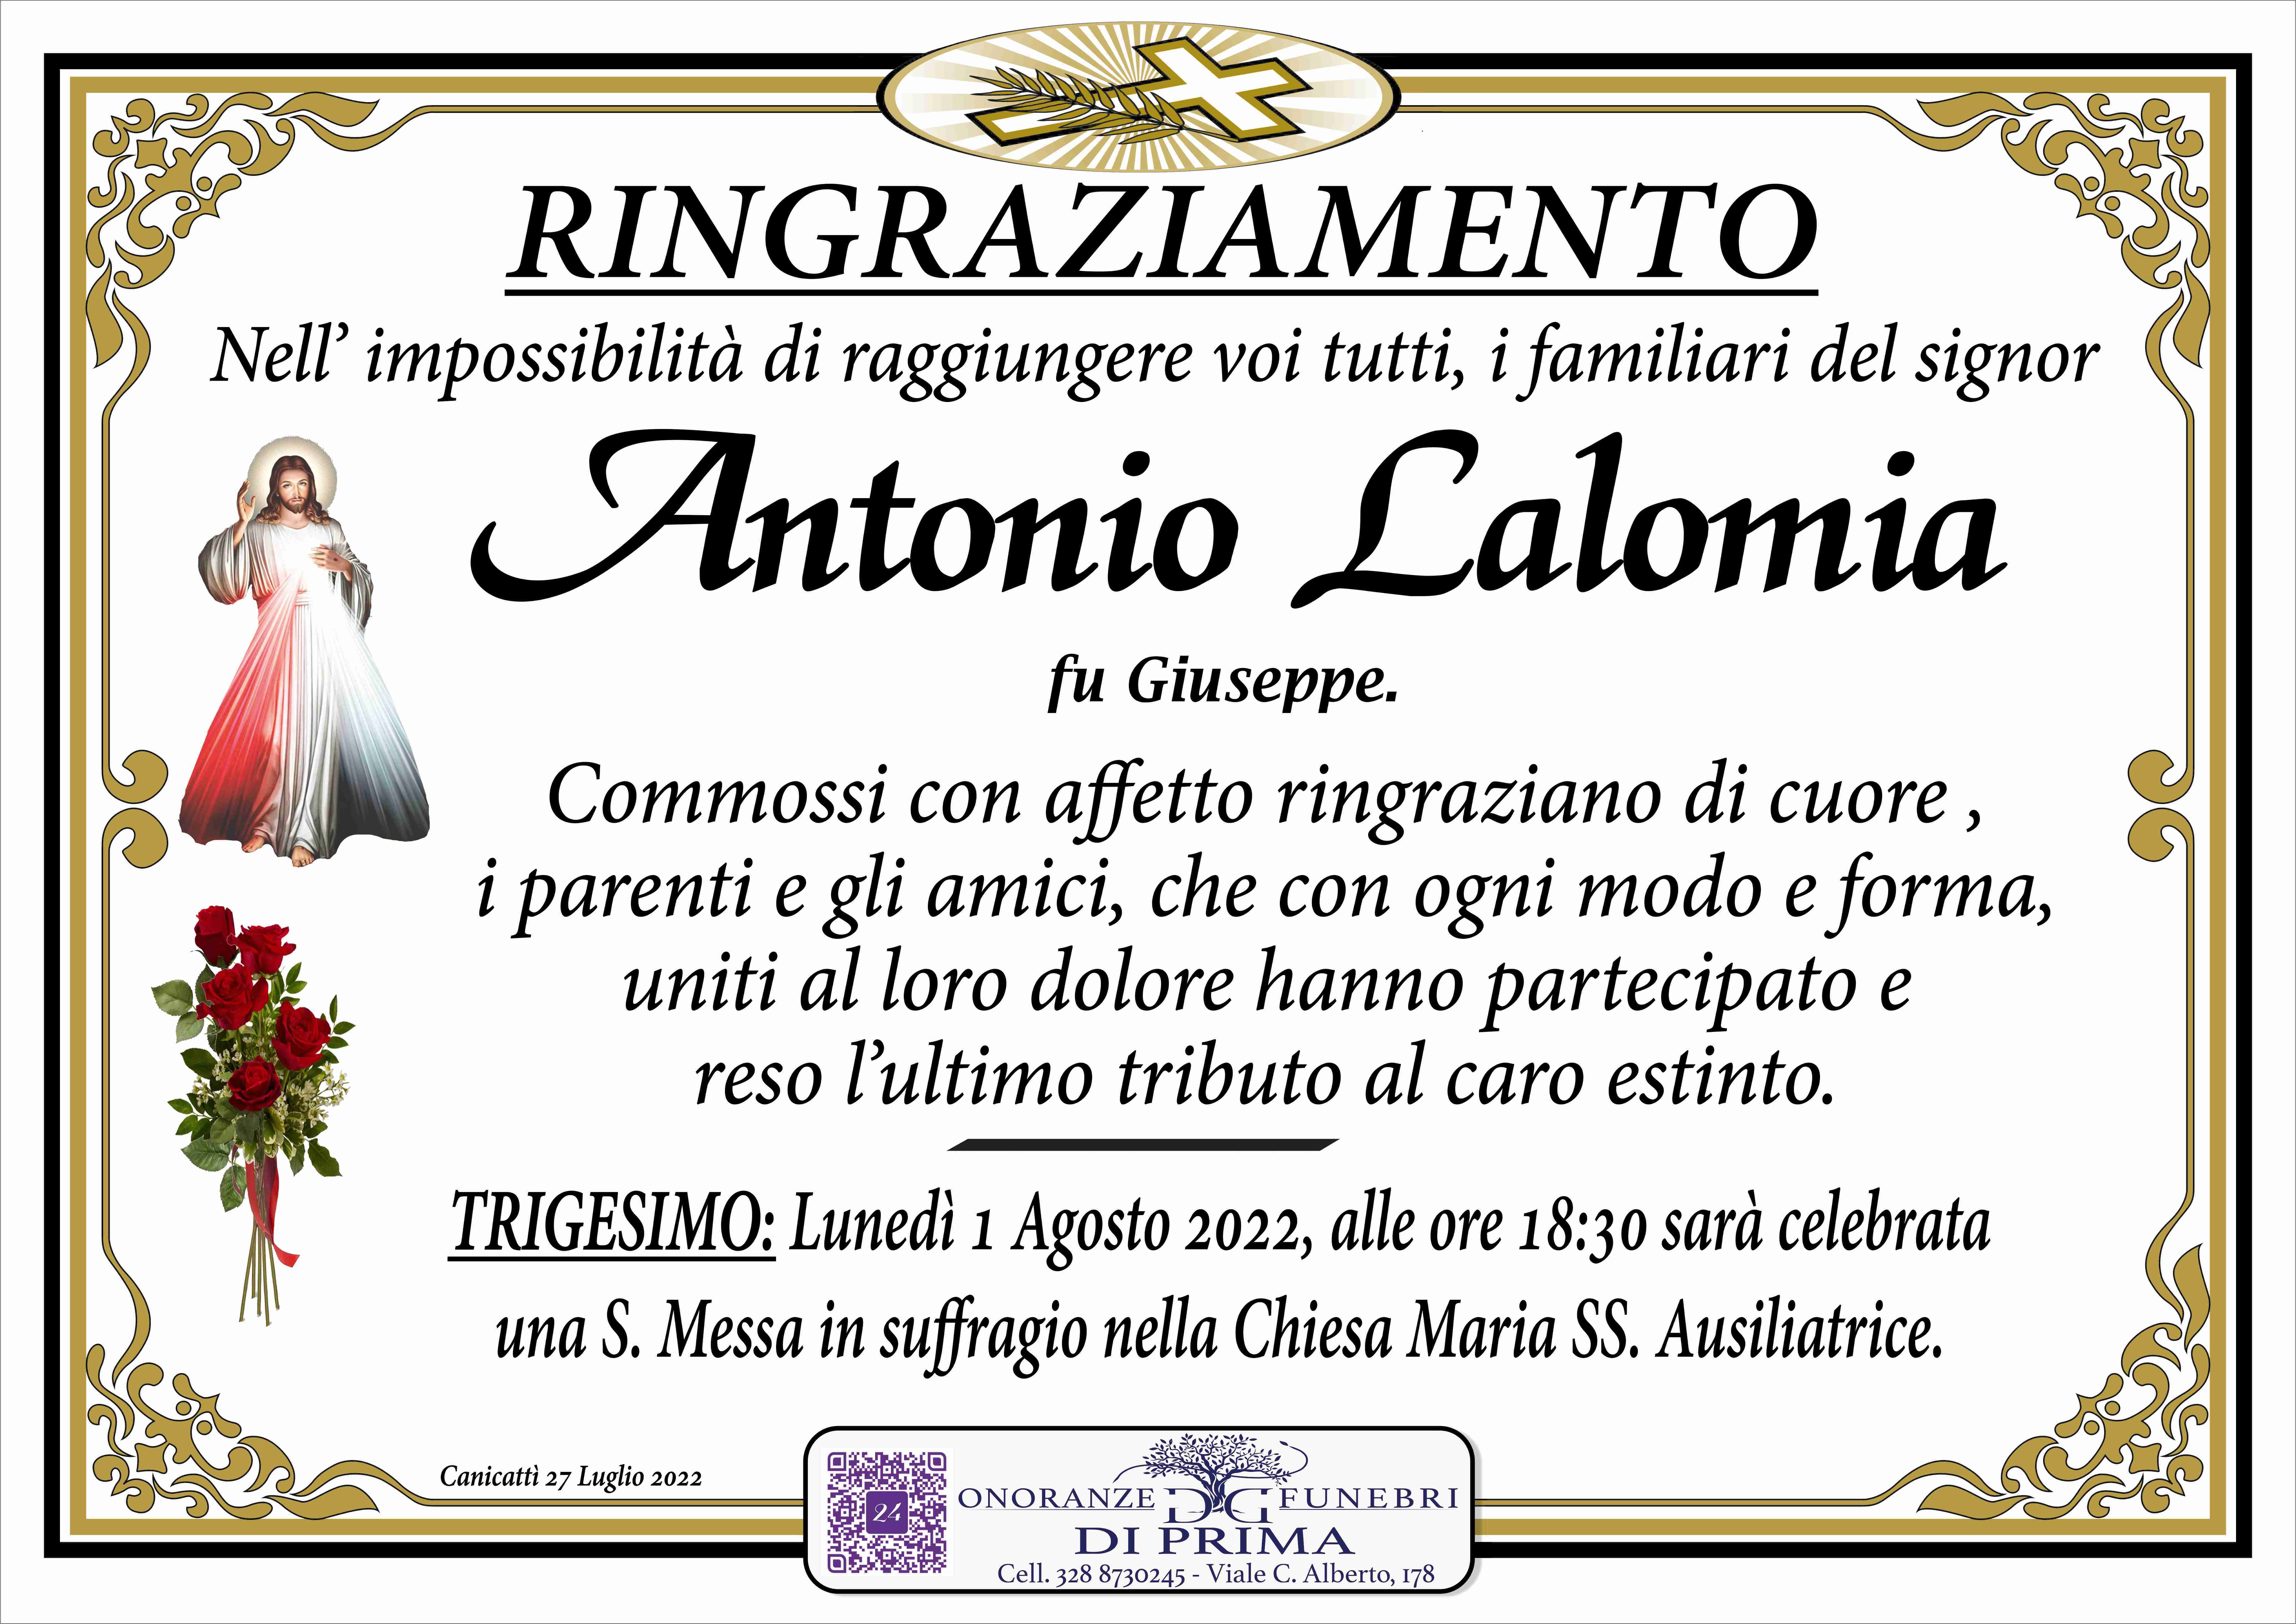 Antonio Lalomia